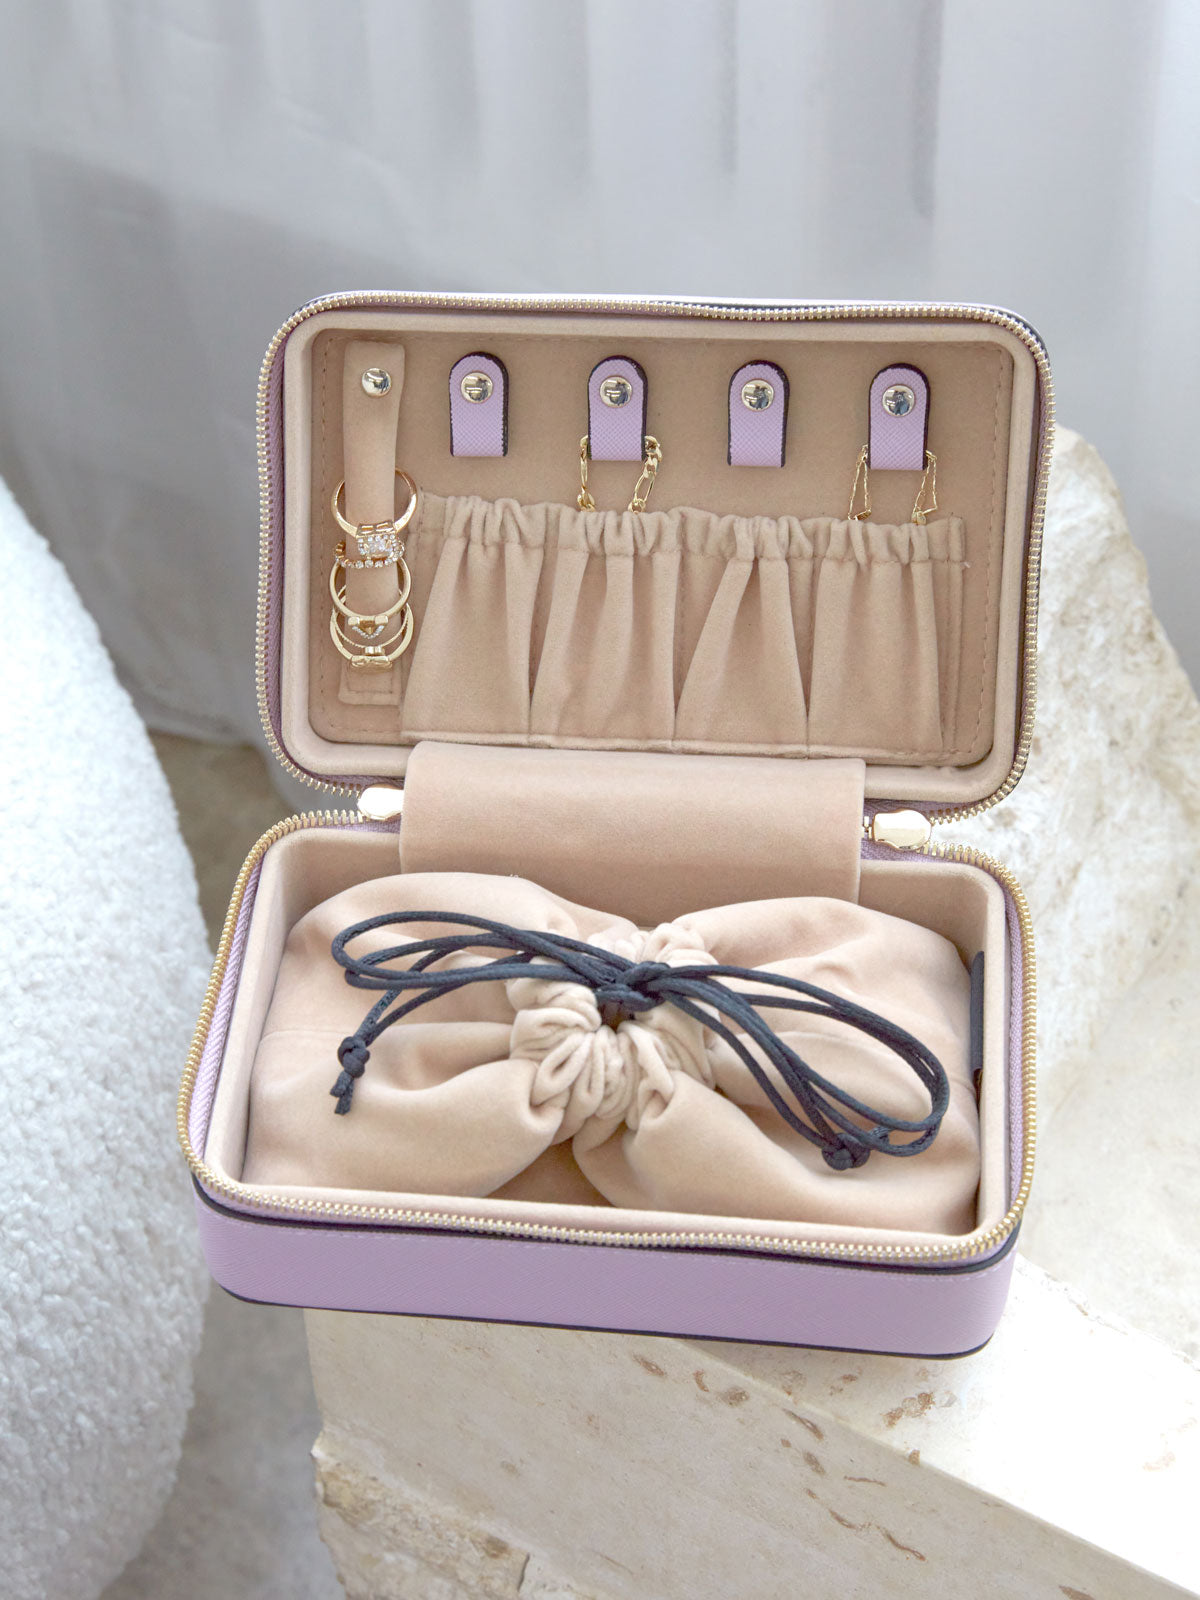 travel jewelry box for women in lavender purple